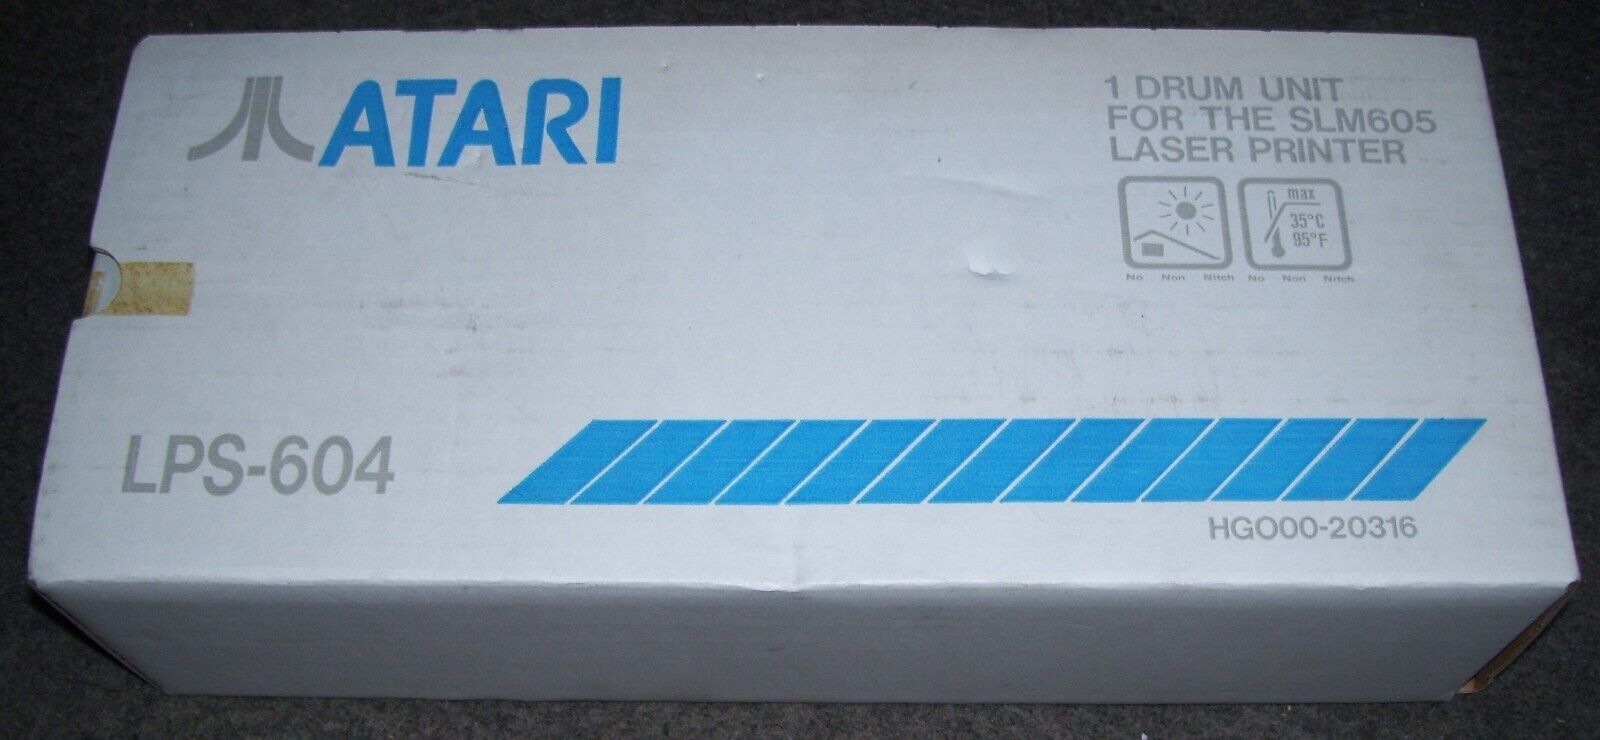 Atari 520 1040 ST STE Computer SLM 605 Laser Printer LPS-604 Drum Unit NEW BOXED